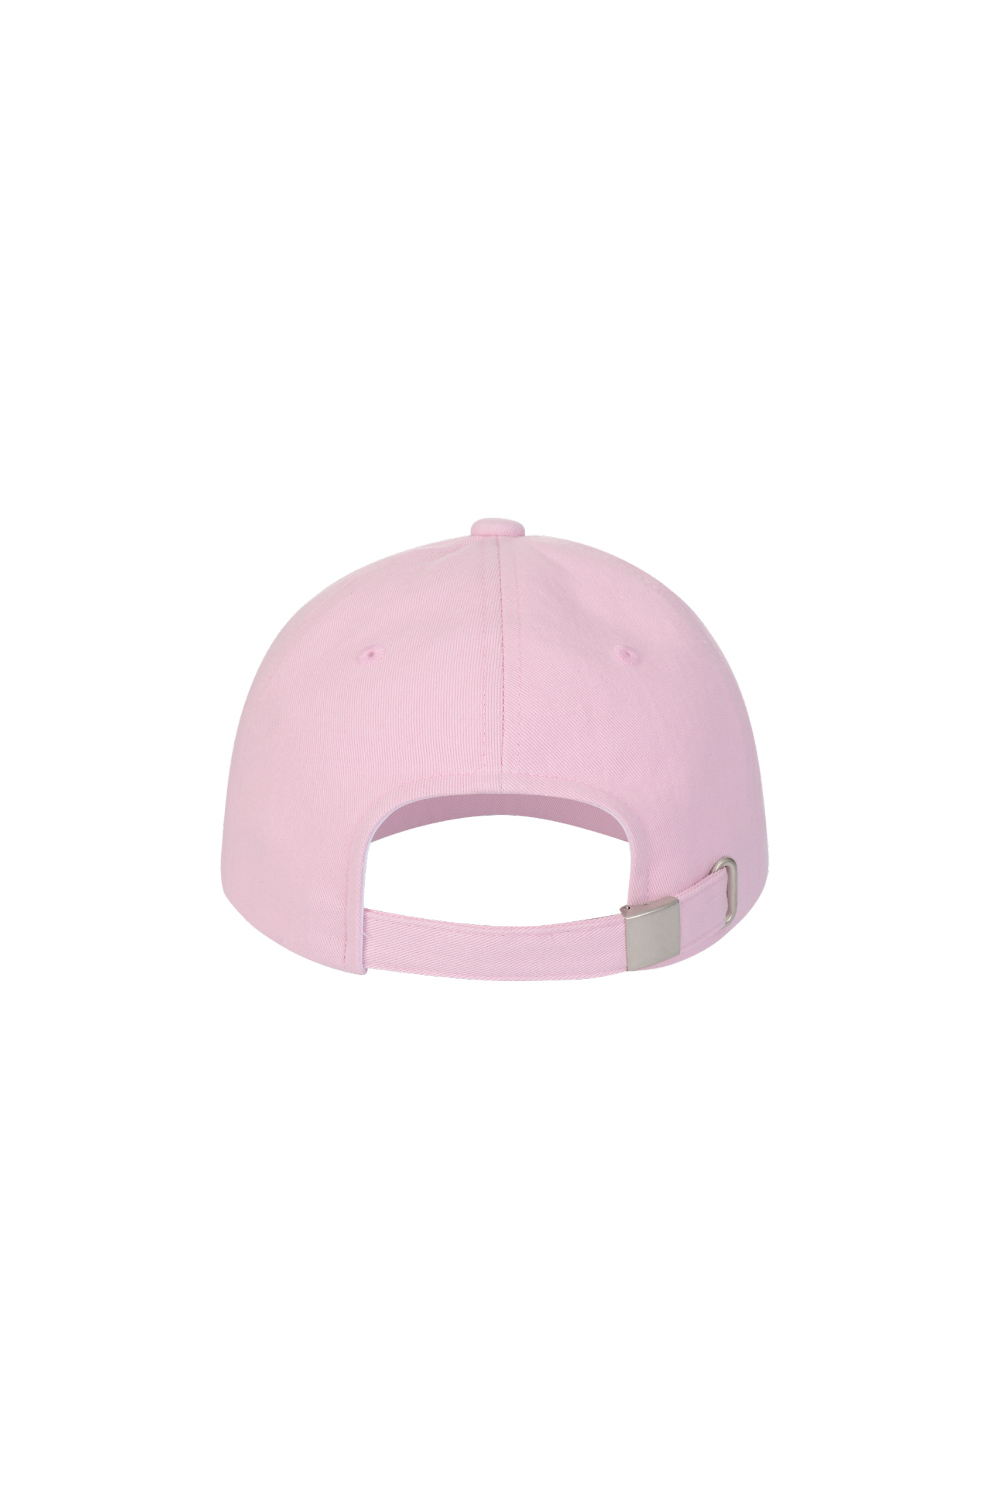 hat baby pink color image-S1L47